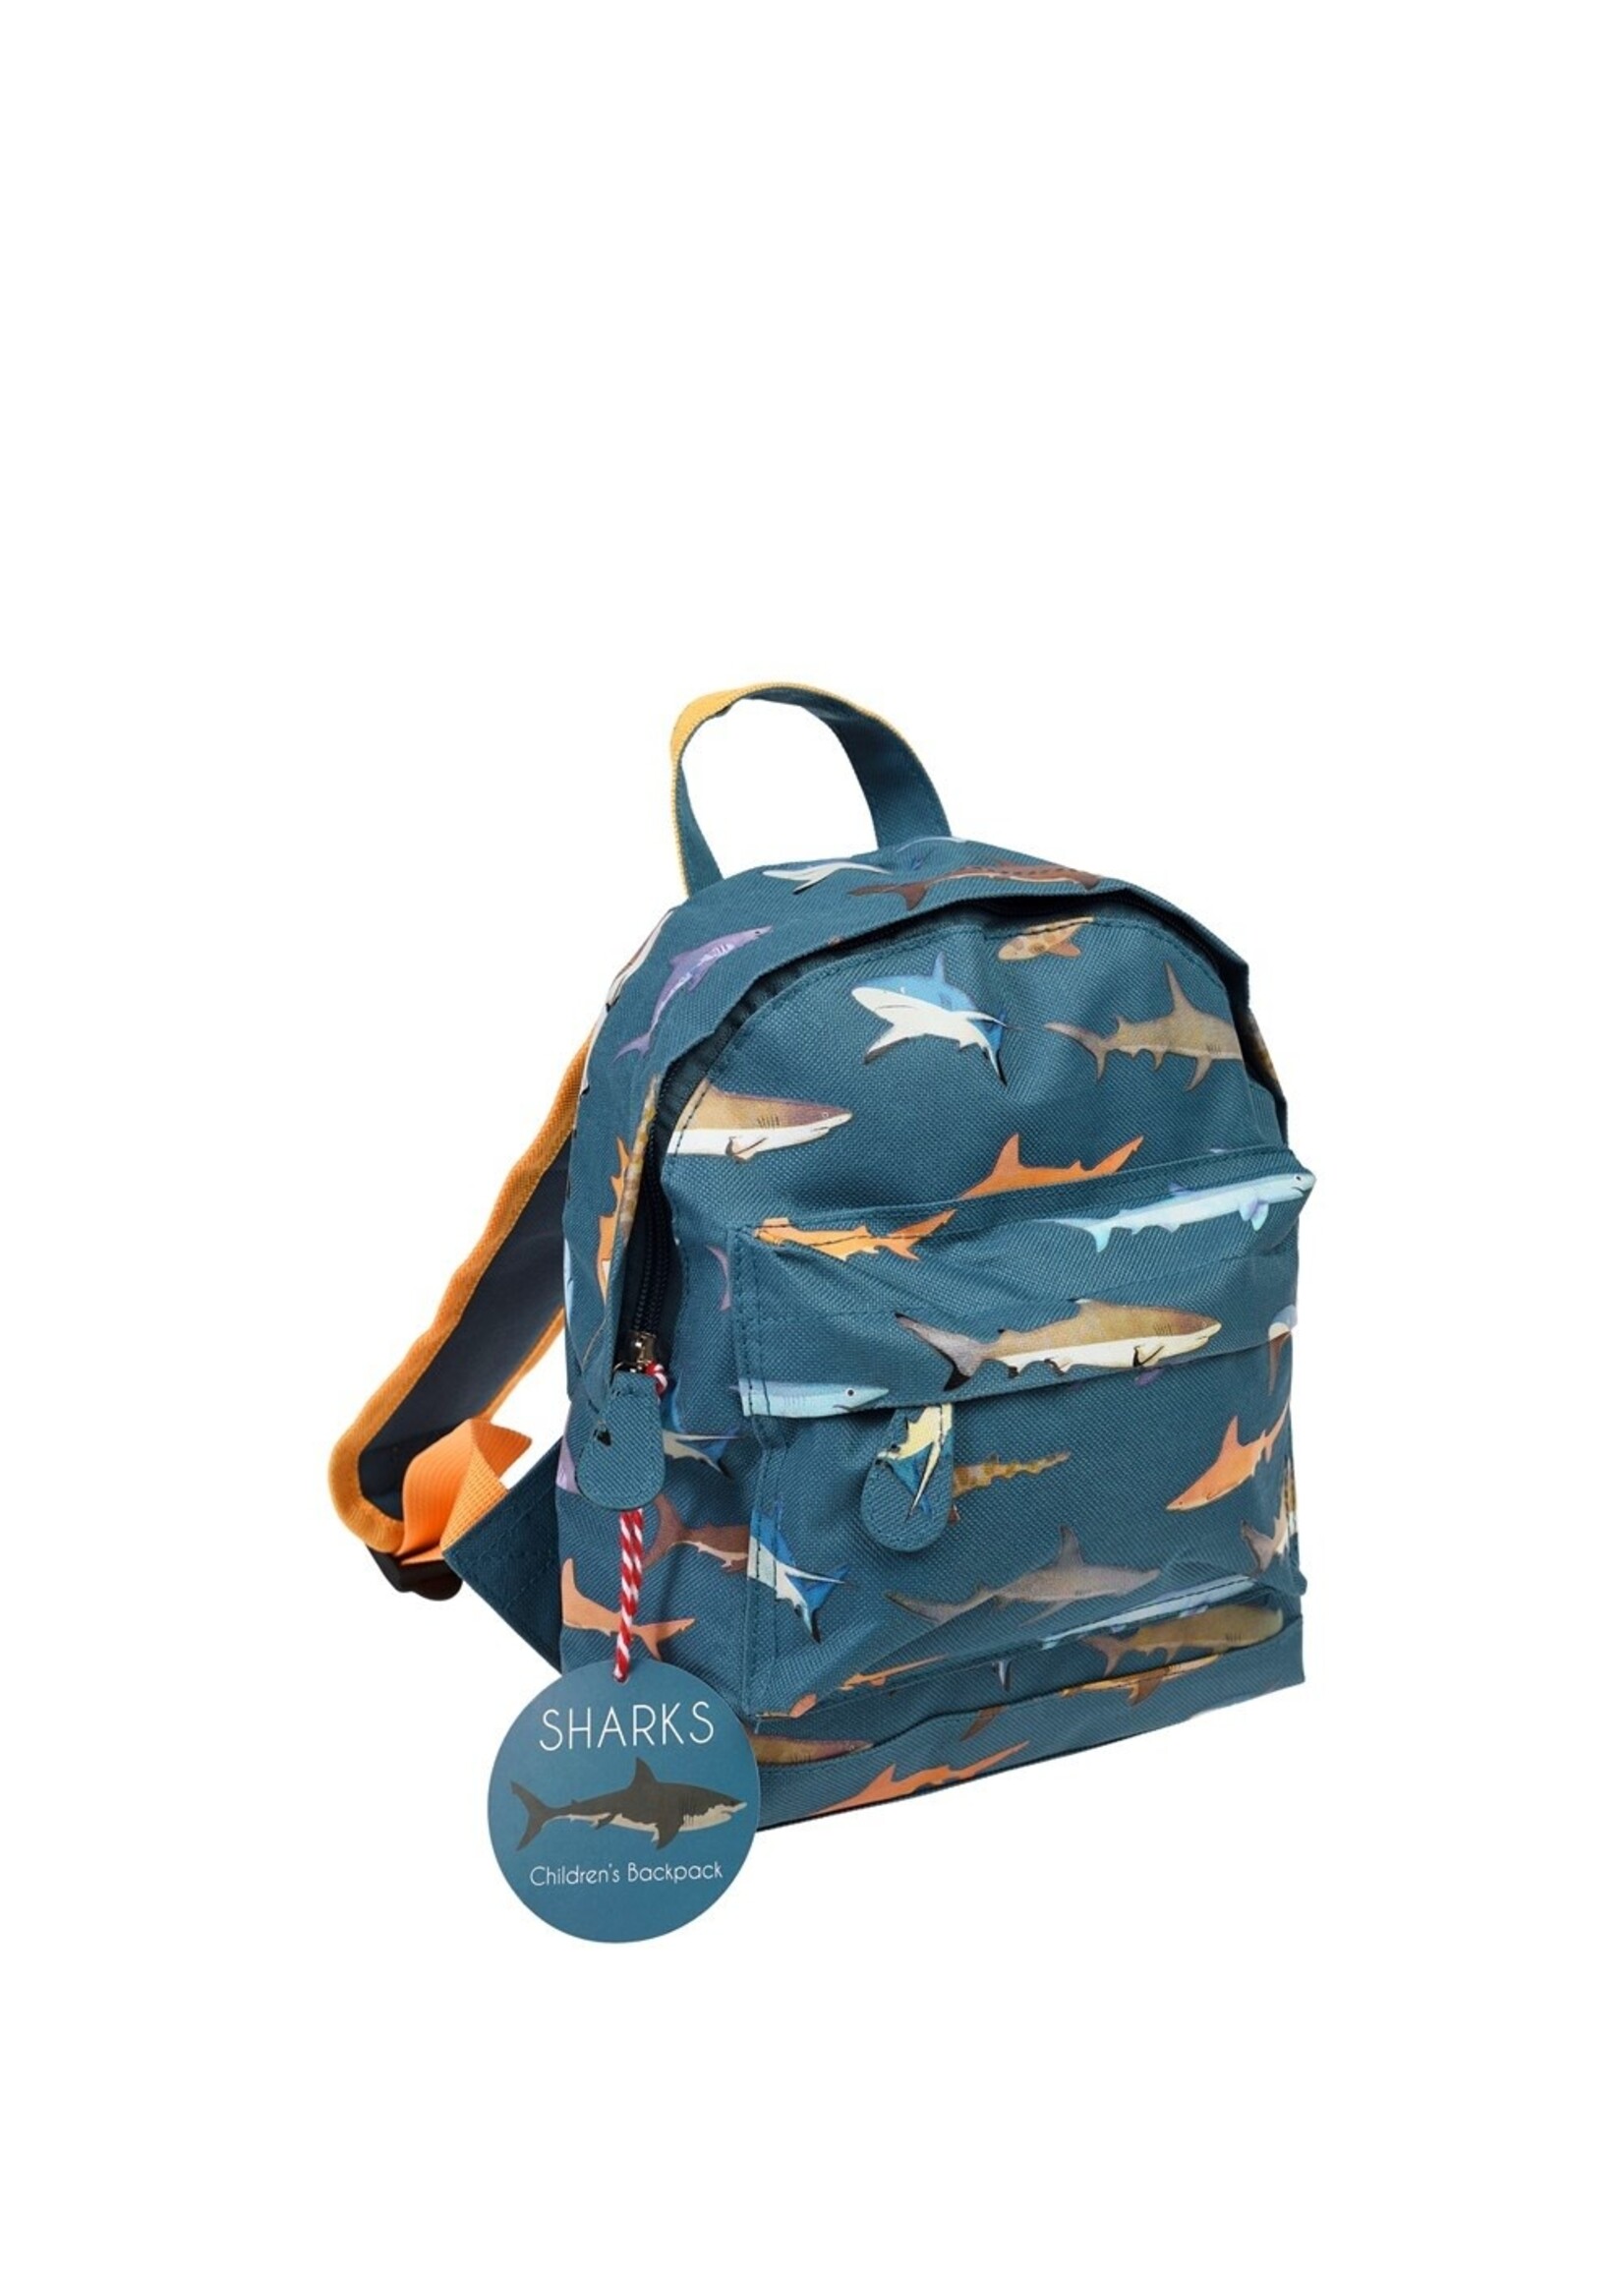 Rex London - Backpack Sharks